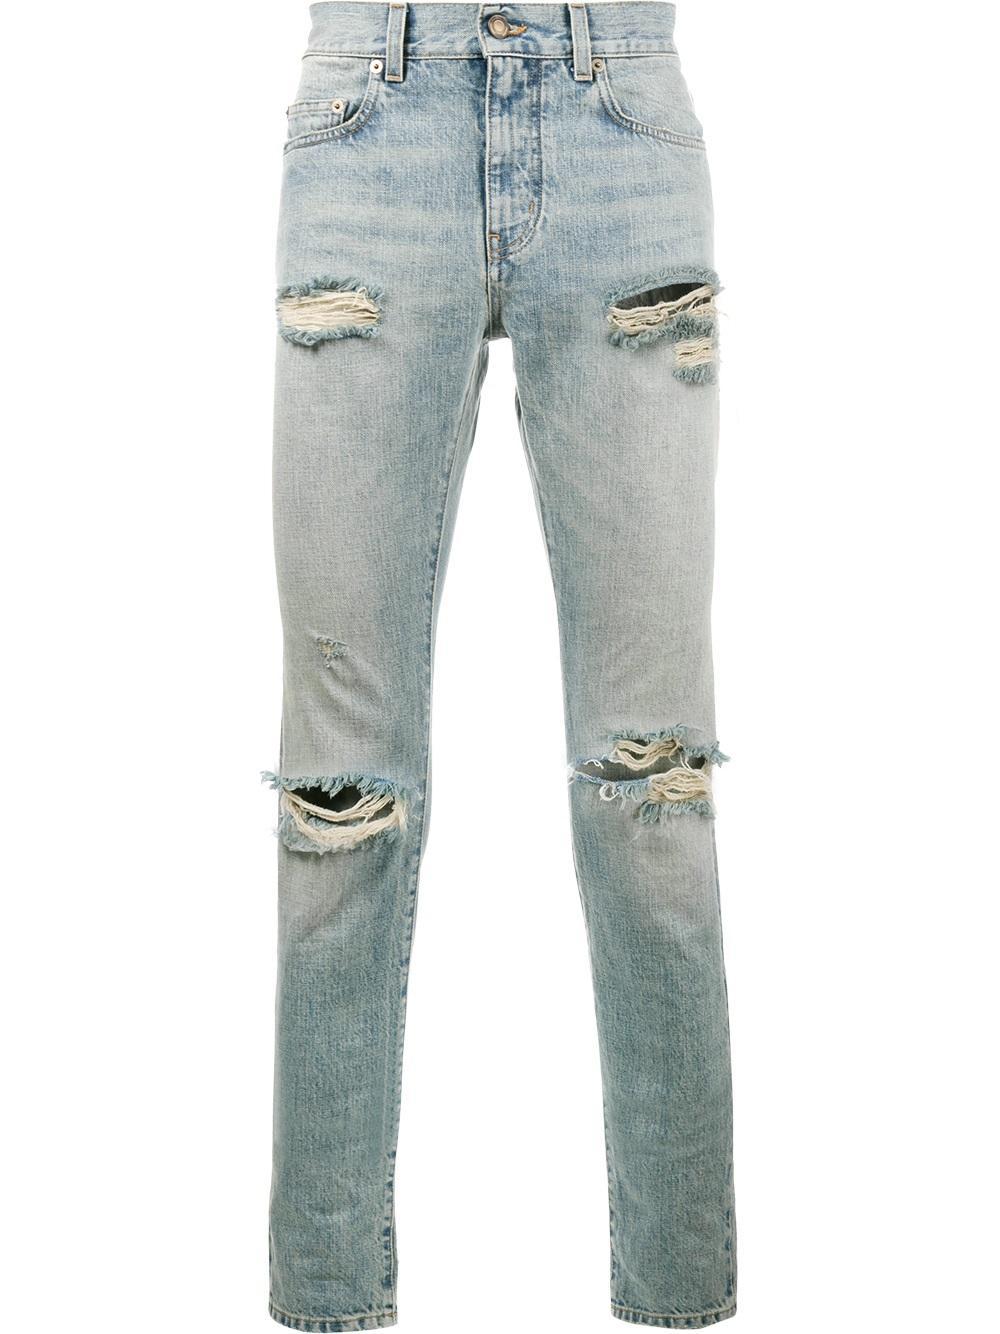 Lyst - Saint Laurent Distressed Skinny Jeans in Blue for Men